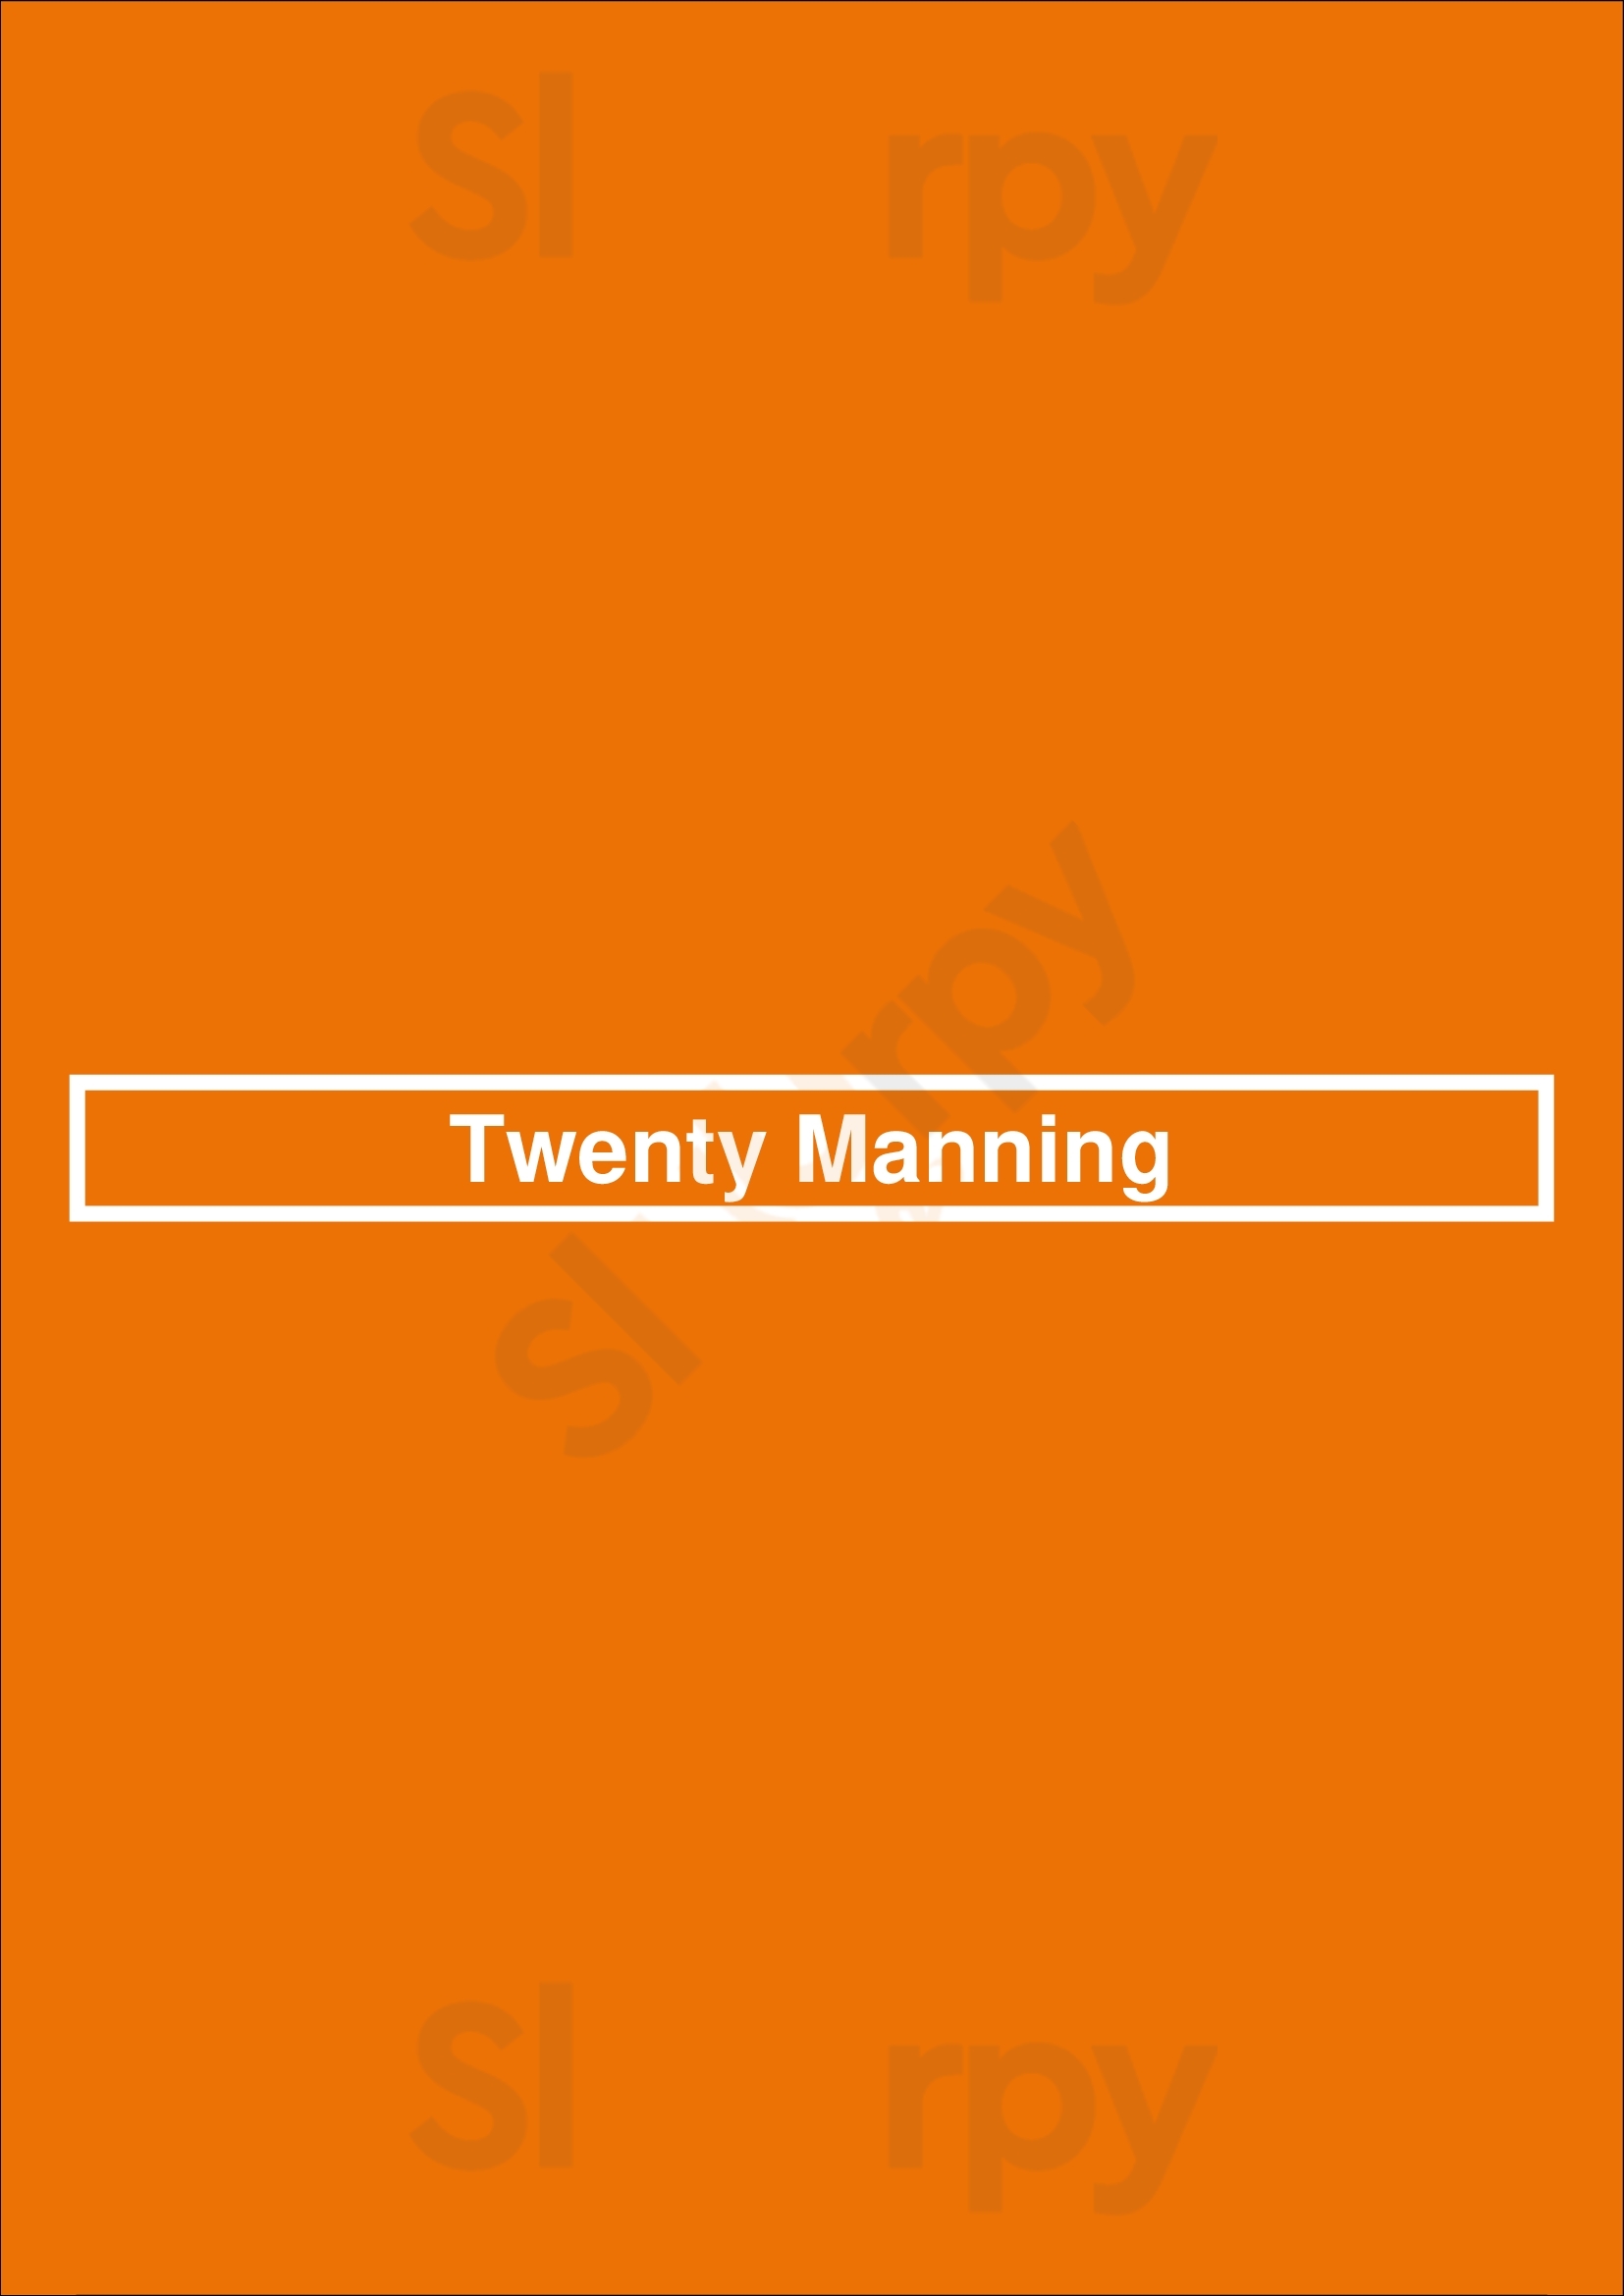 Twenty Manning Philadelphia Menu - 1